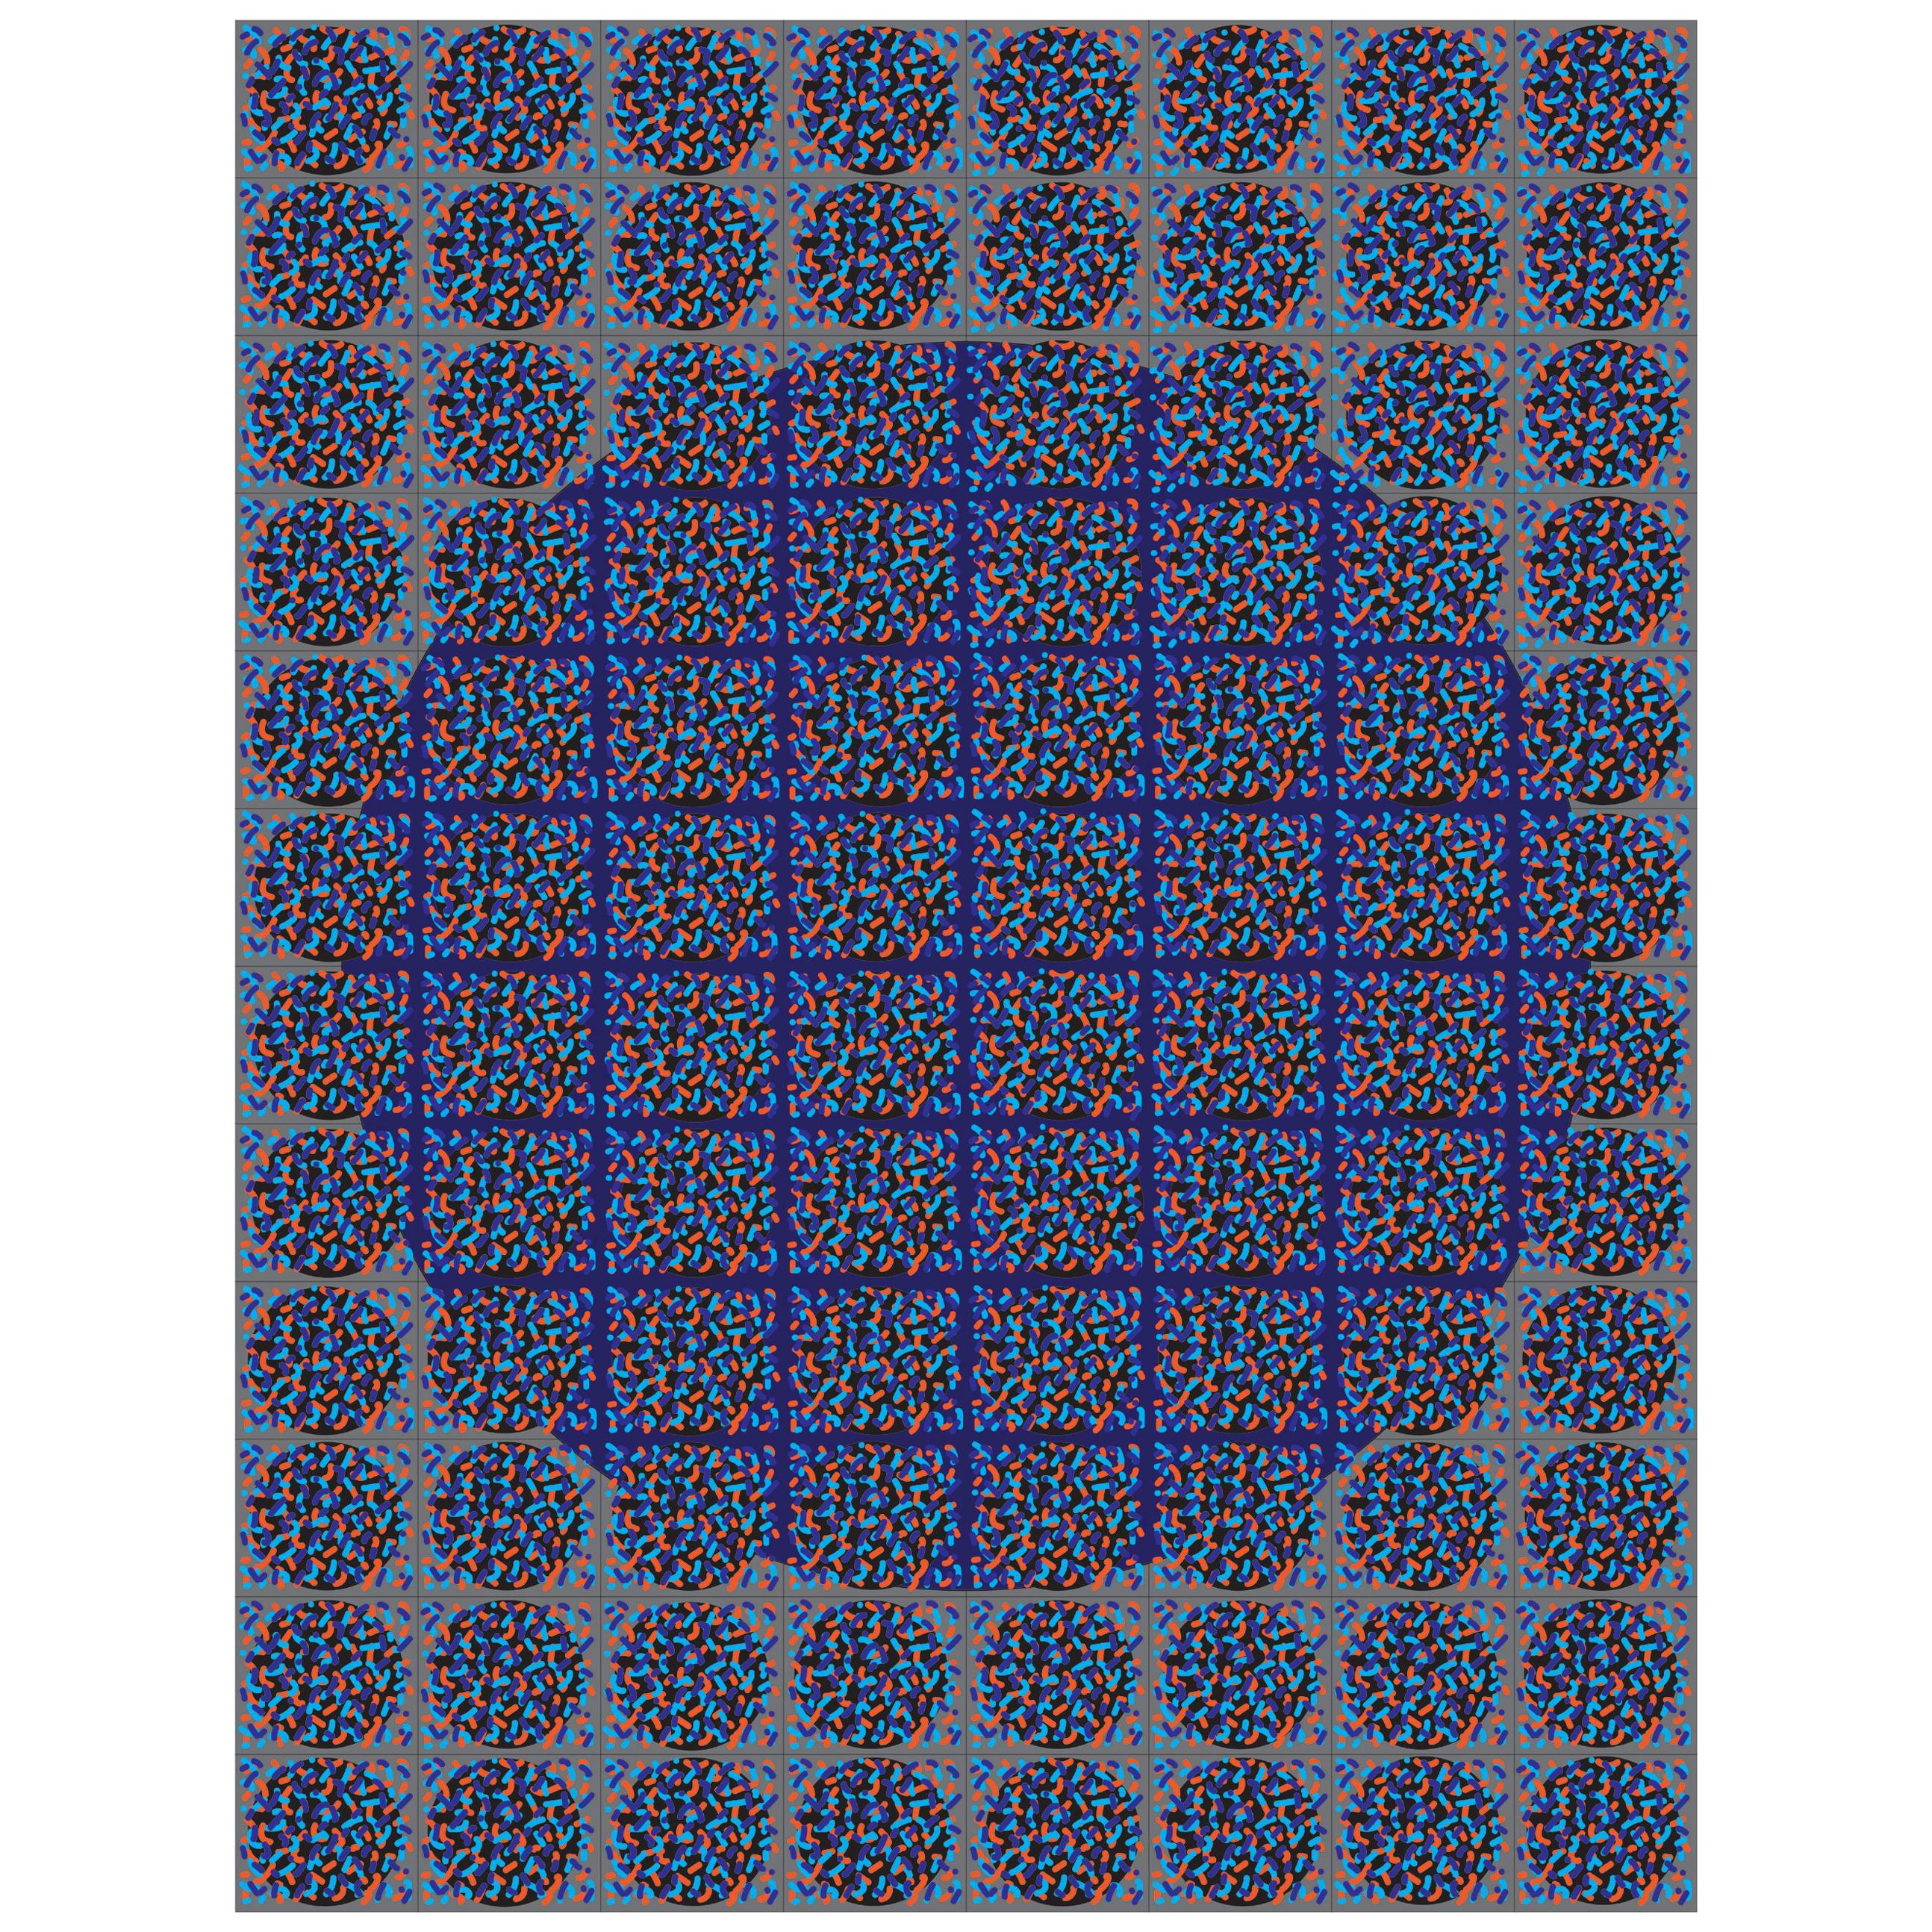 Michael Zenreich Conceptual Abstract Digital Print "Confetti Blue Circle'